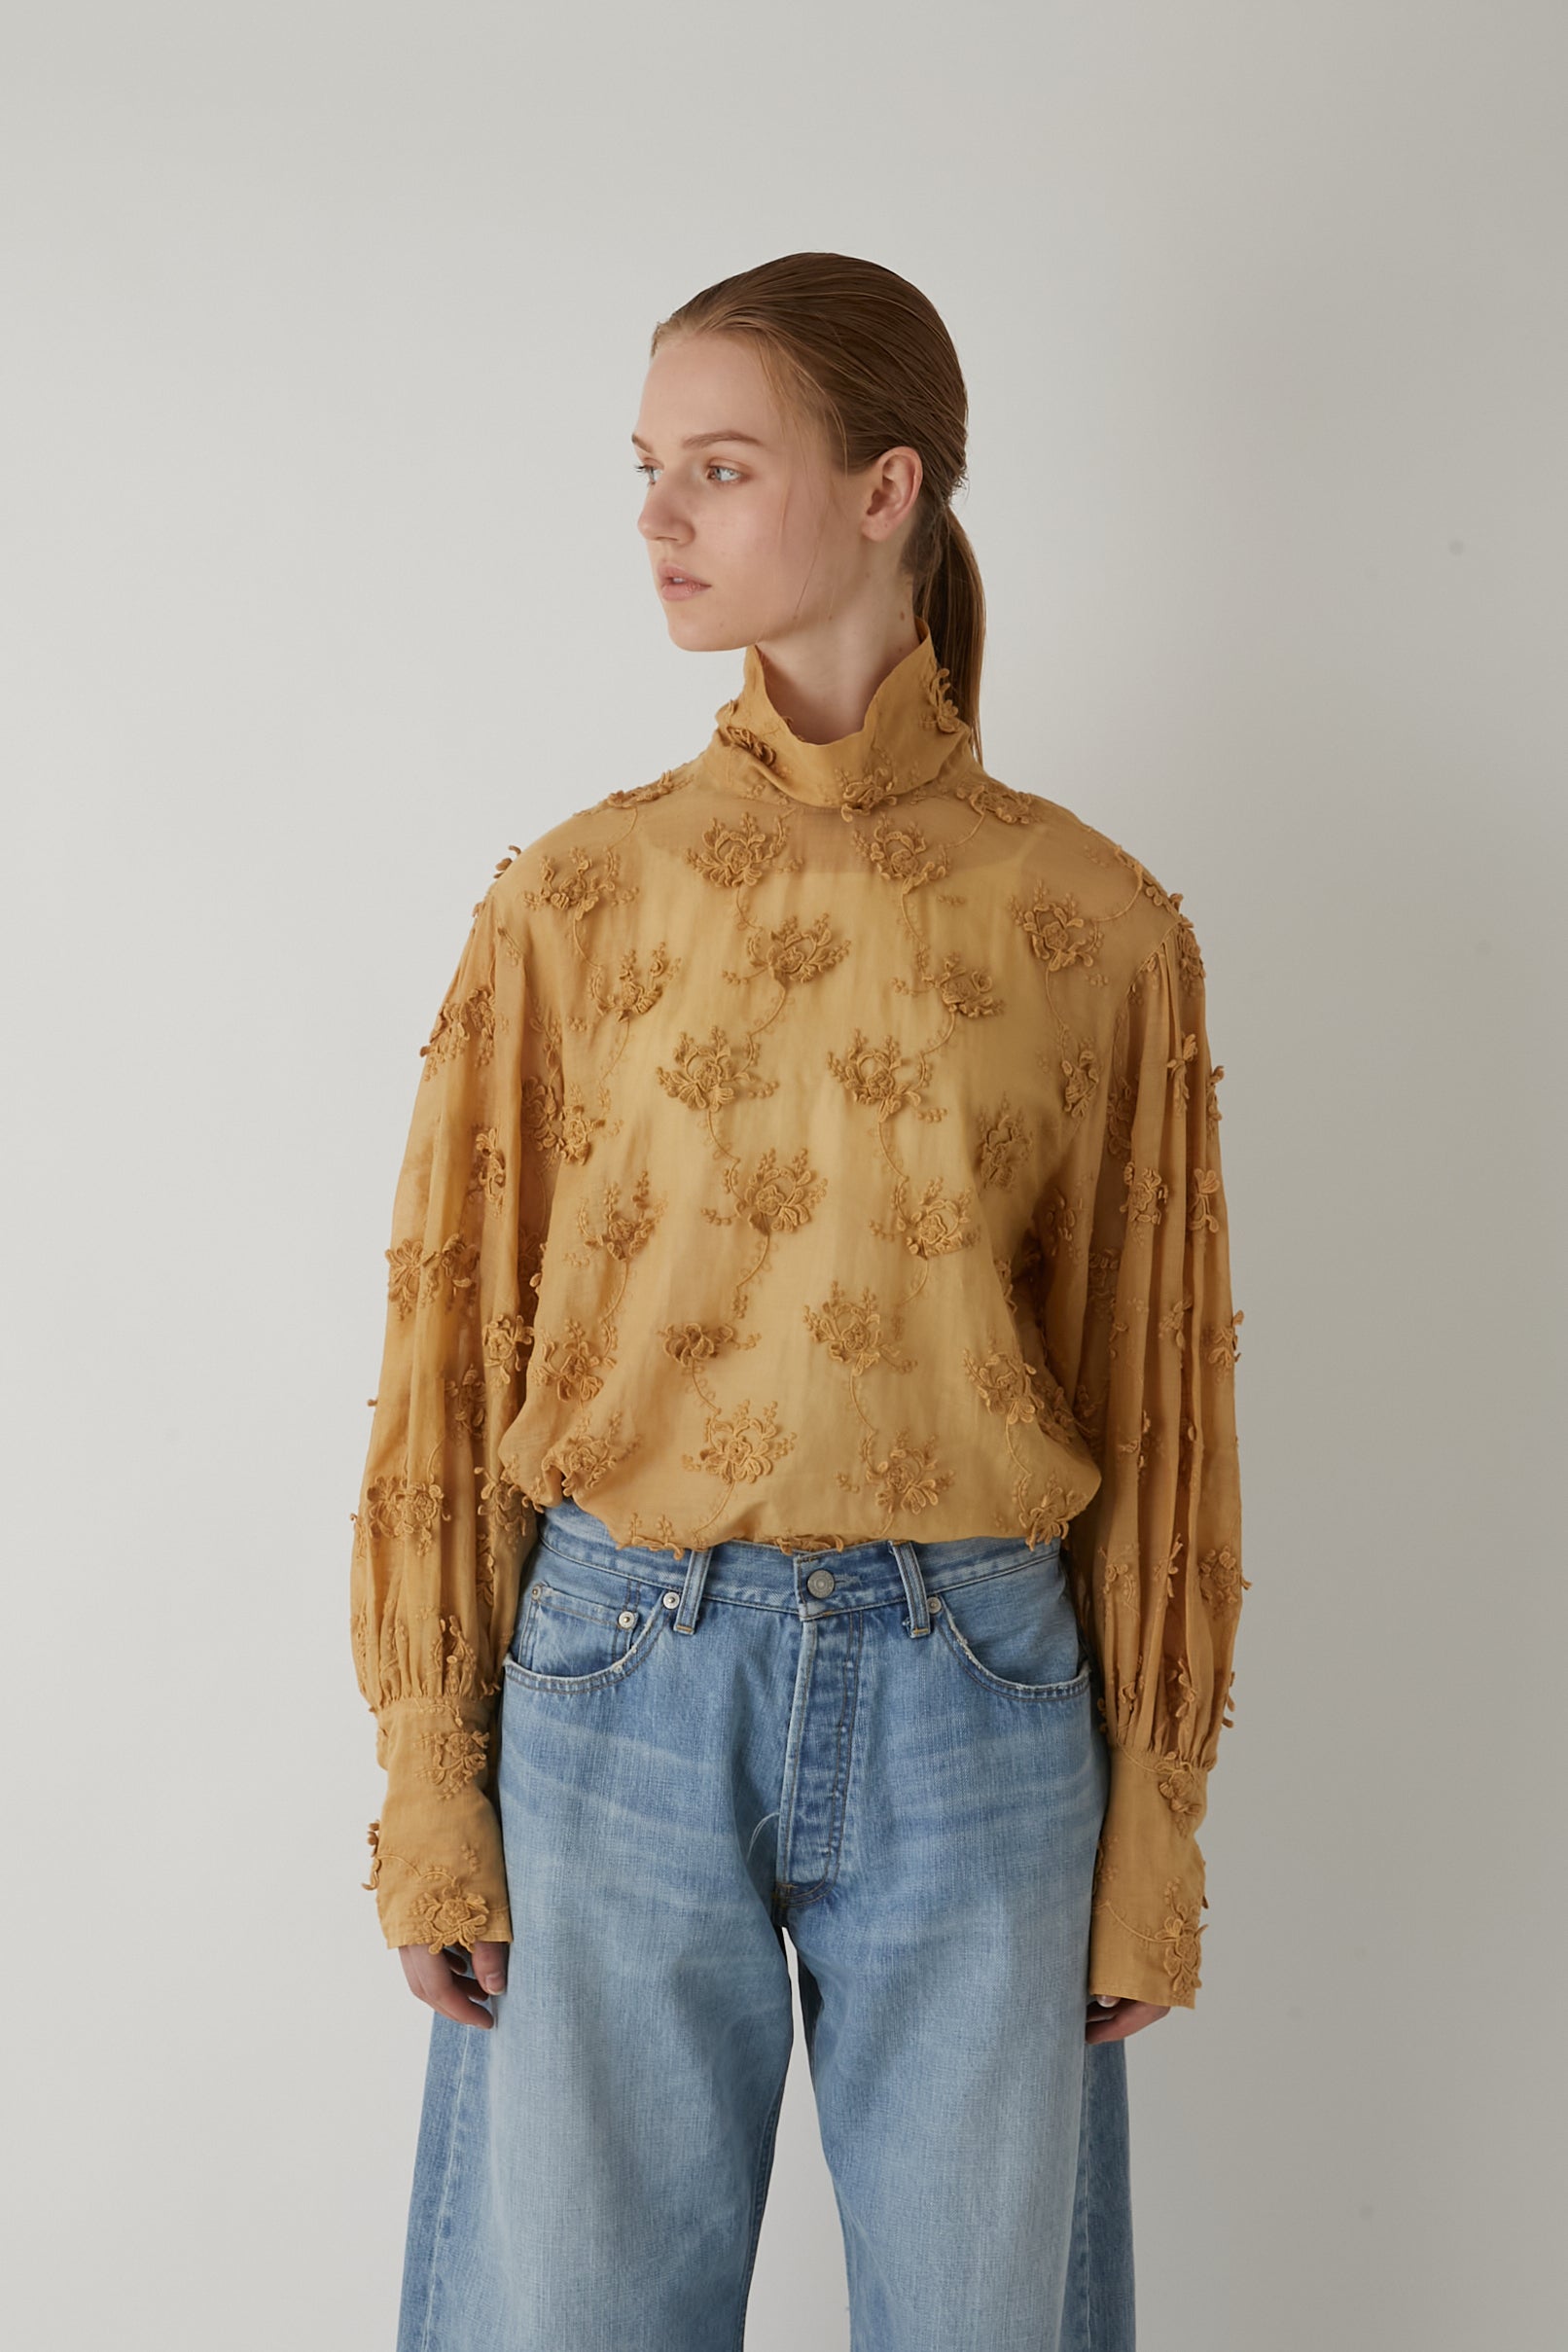 【SECRET SALE】3D embroidery long blouse │ BARLEY CAMEL